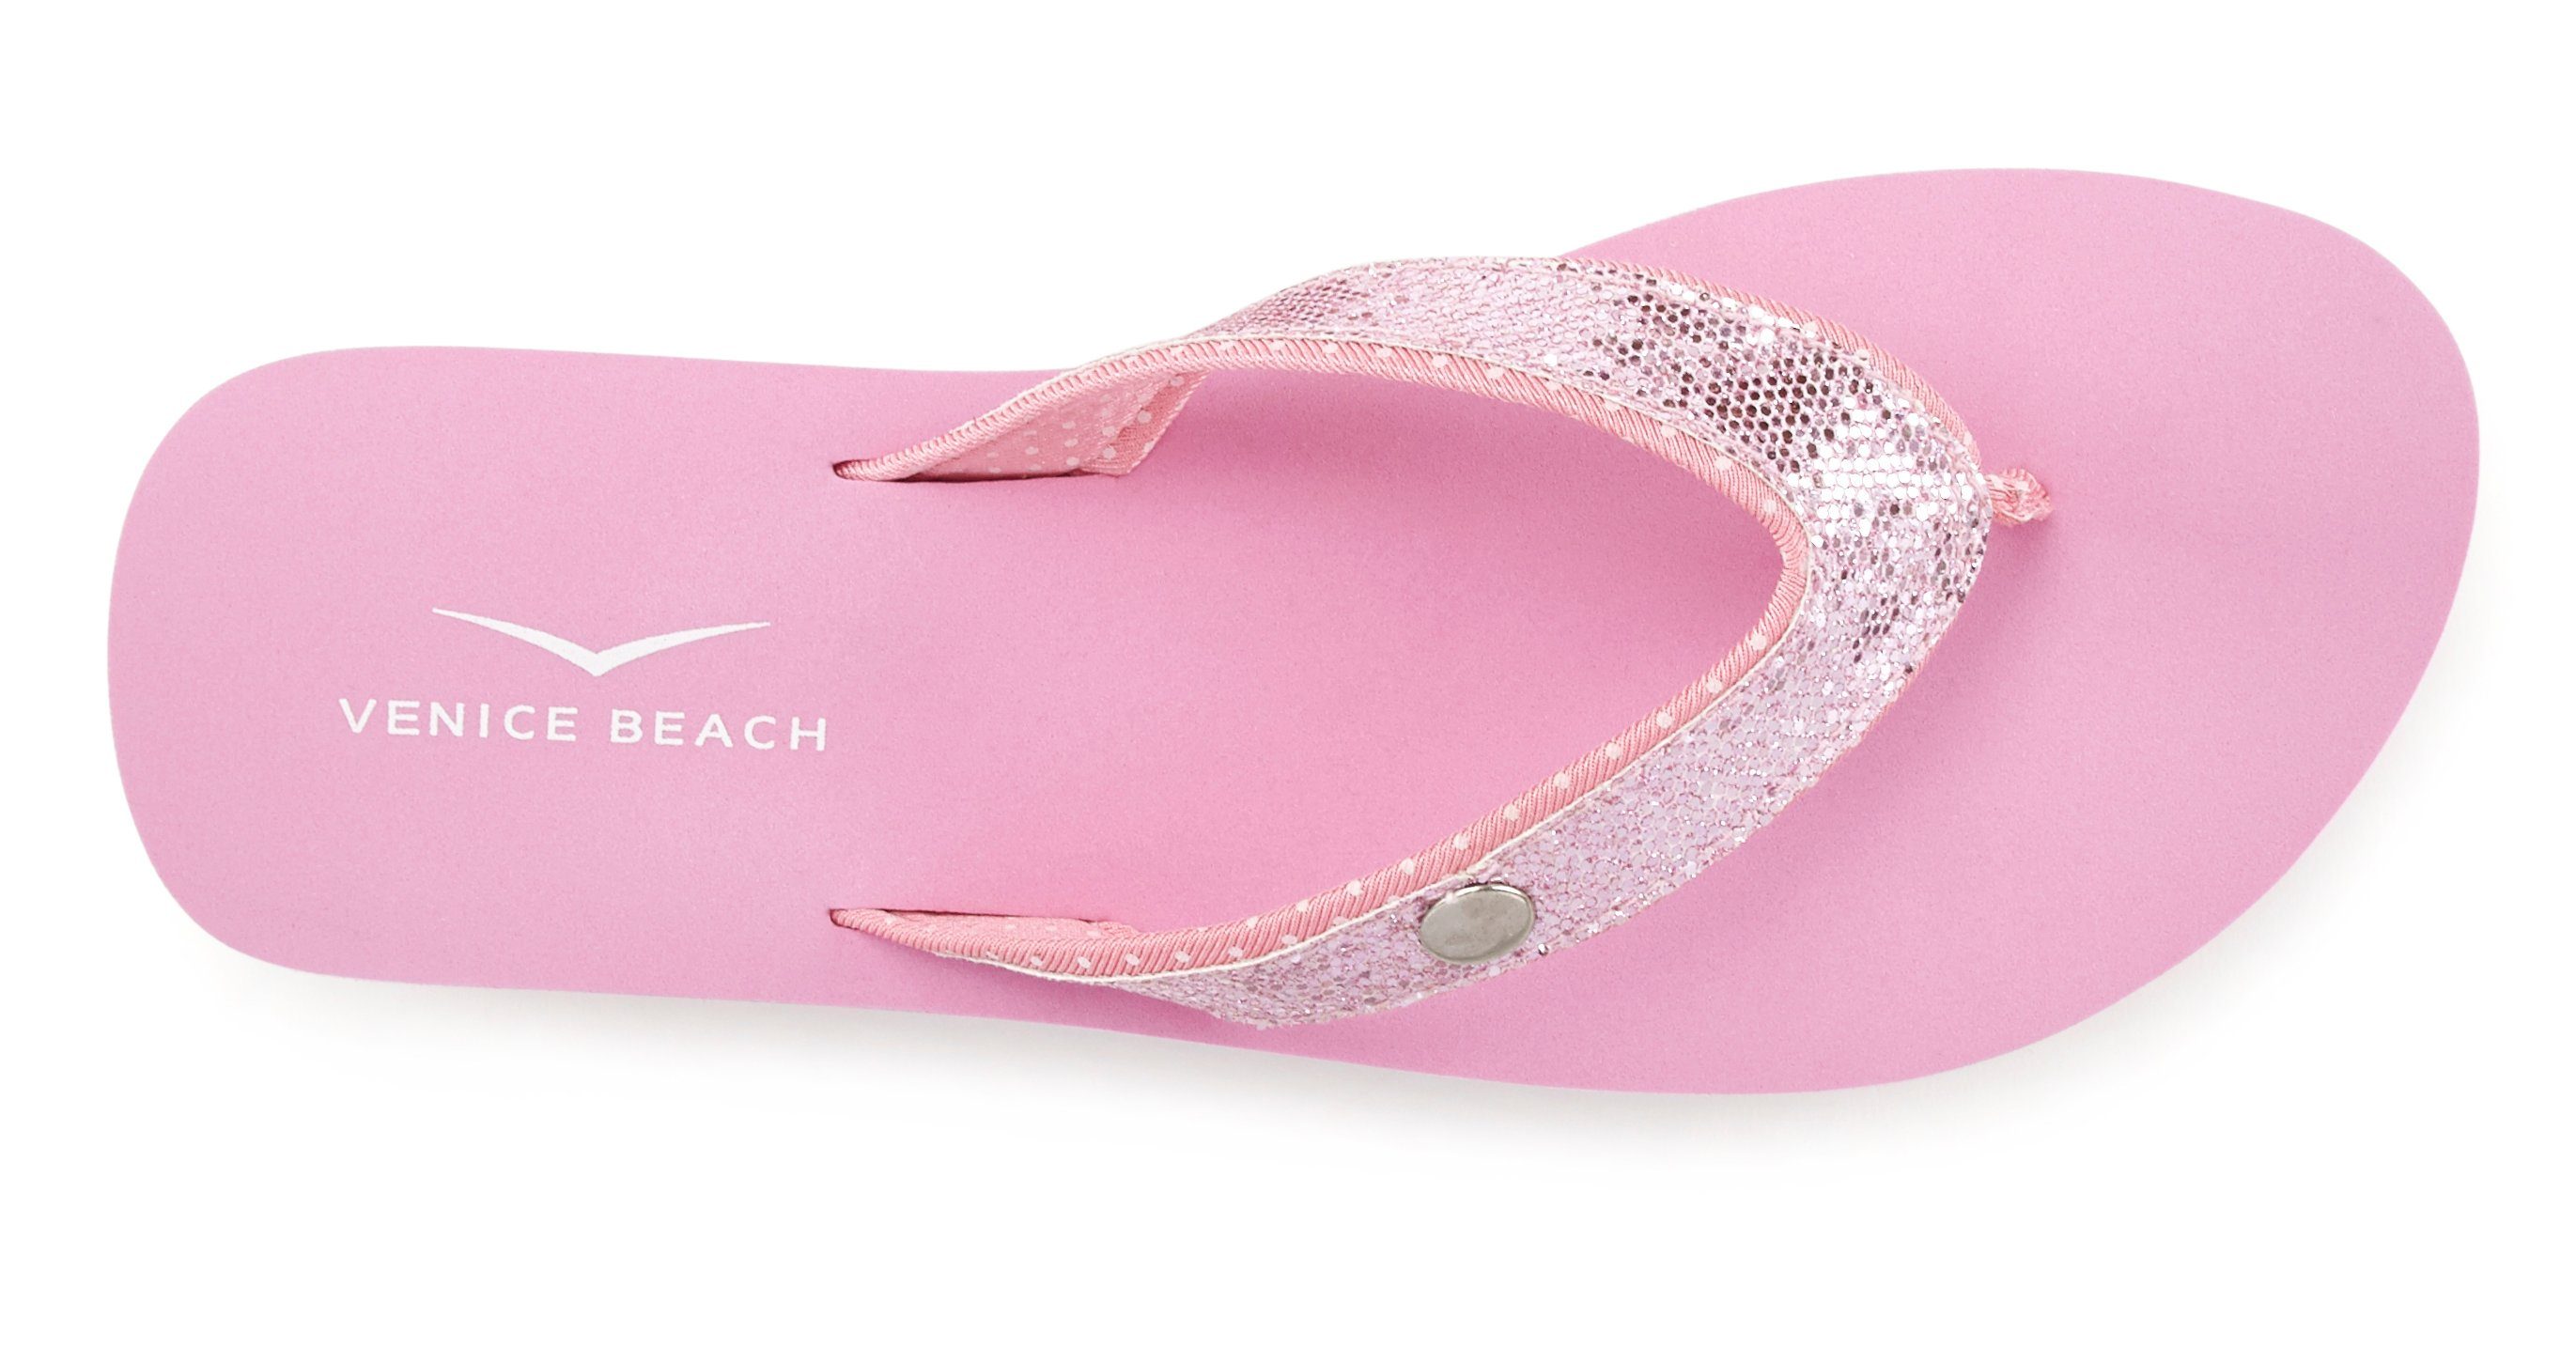 Venice Beach Badezehentrenner ultraleicht Pantolette, rosé VEGAN Glitzerband Badeschuh Sandale, mit